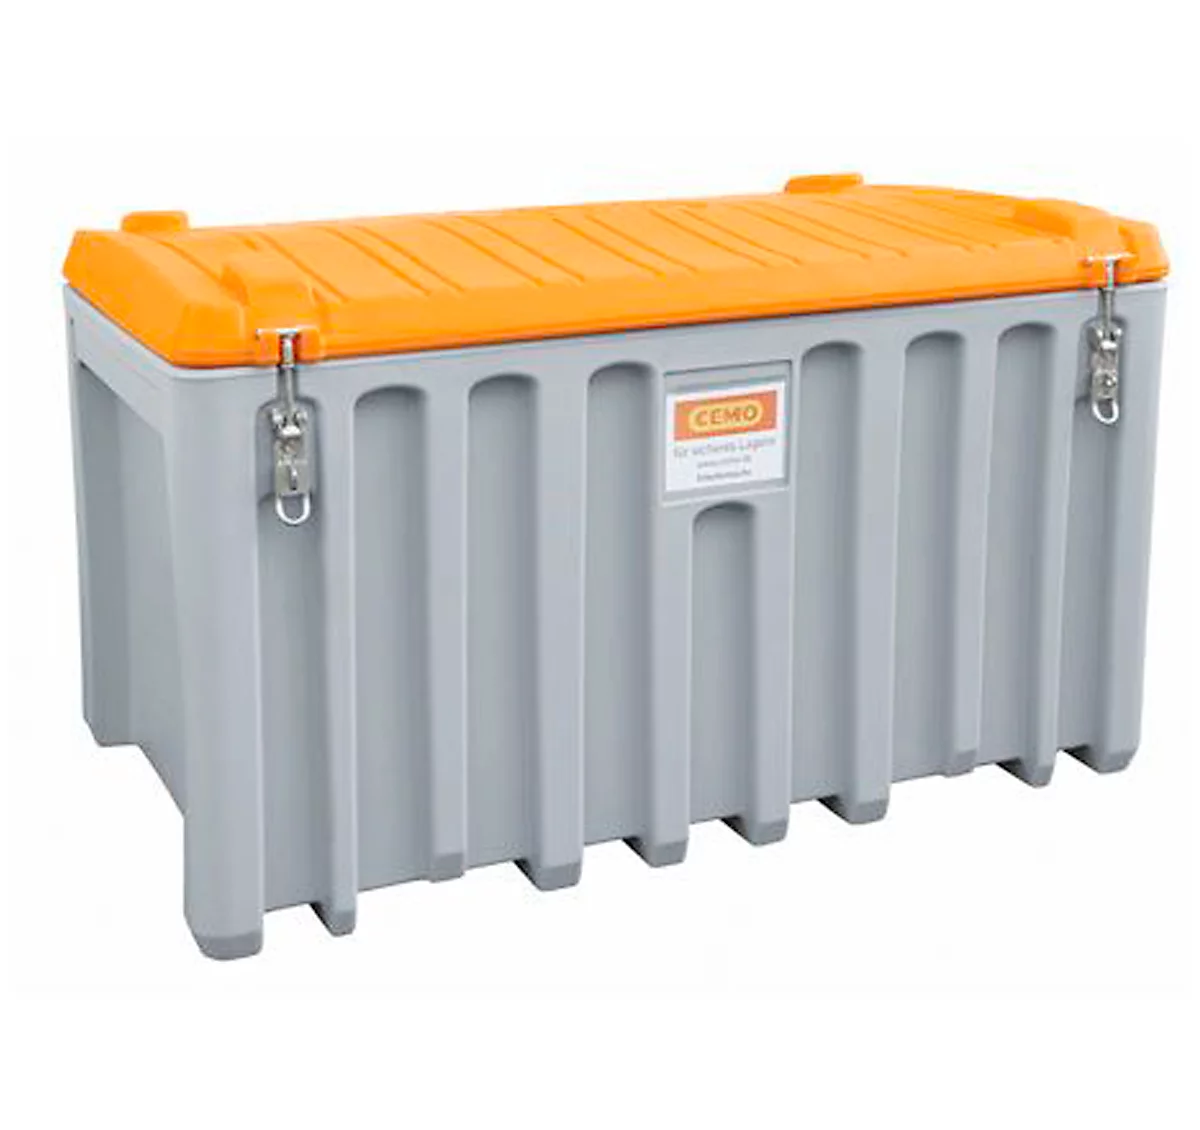 Caja de transporte y plataforma CEMO CEMbox 400, polietileno, 400 l, L 1200 x A 810 x H 750 mm, apilable, con grúa, gris/naranja